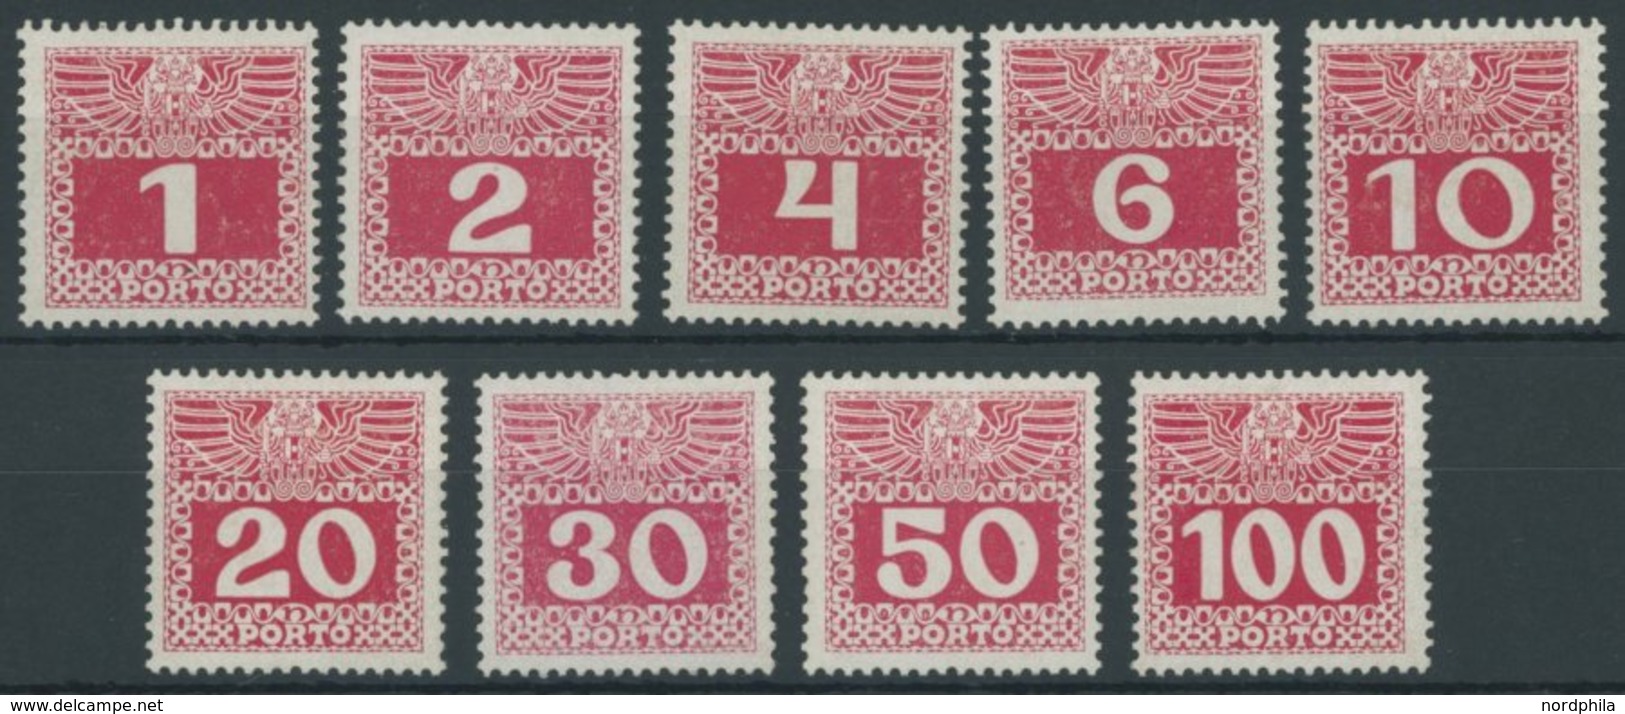 PORTOMARKEN P 34-44x *, 1908, 1 - 100 H. Lebhaftlilarot, Kreidepapier, Falzreste, Prachtsatz (9 Werte), Mi. 85.- - Postage Due